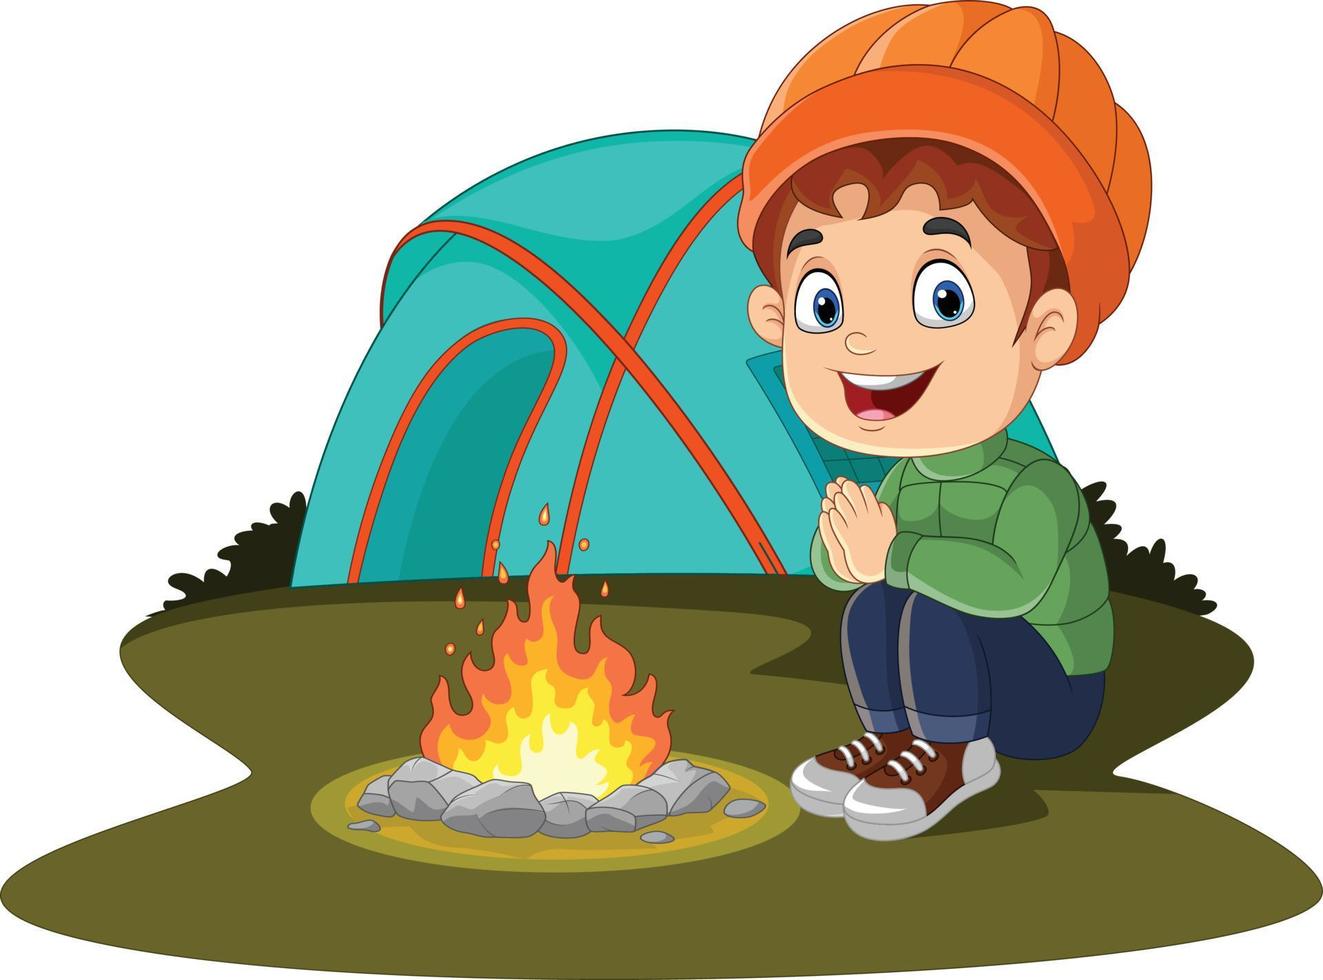 Cartoon little boy camping near campfire and tent vector